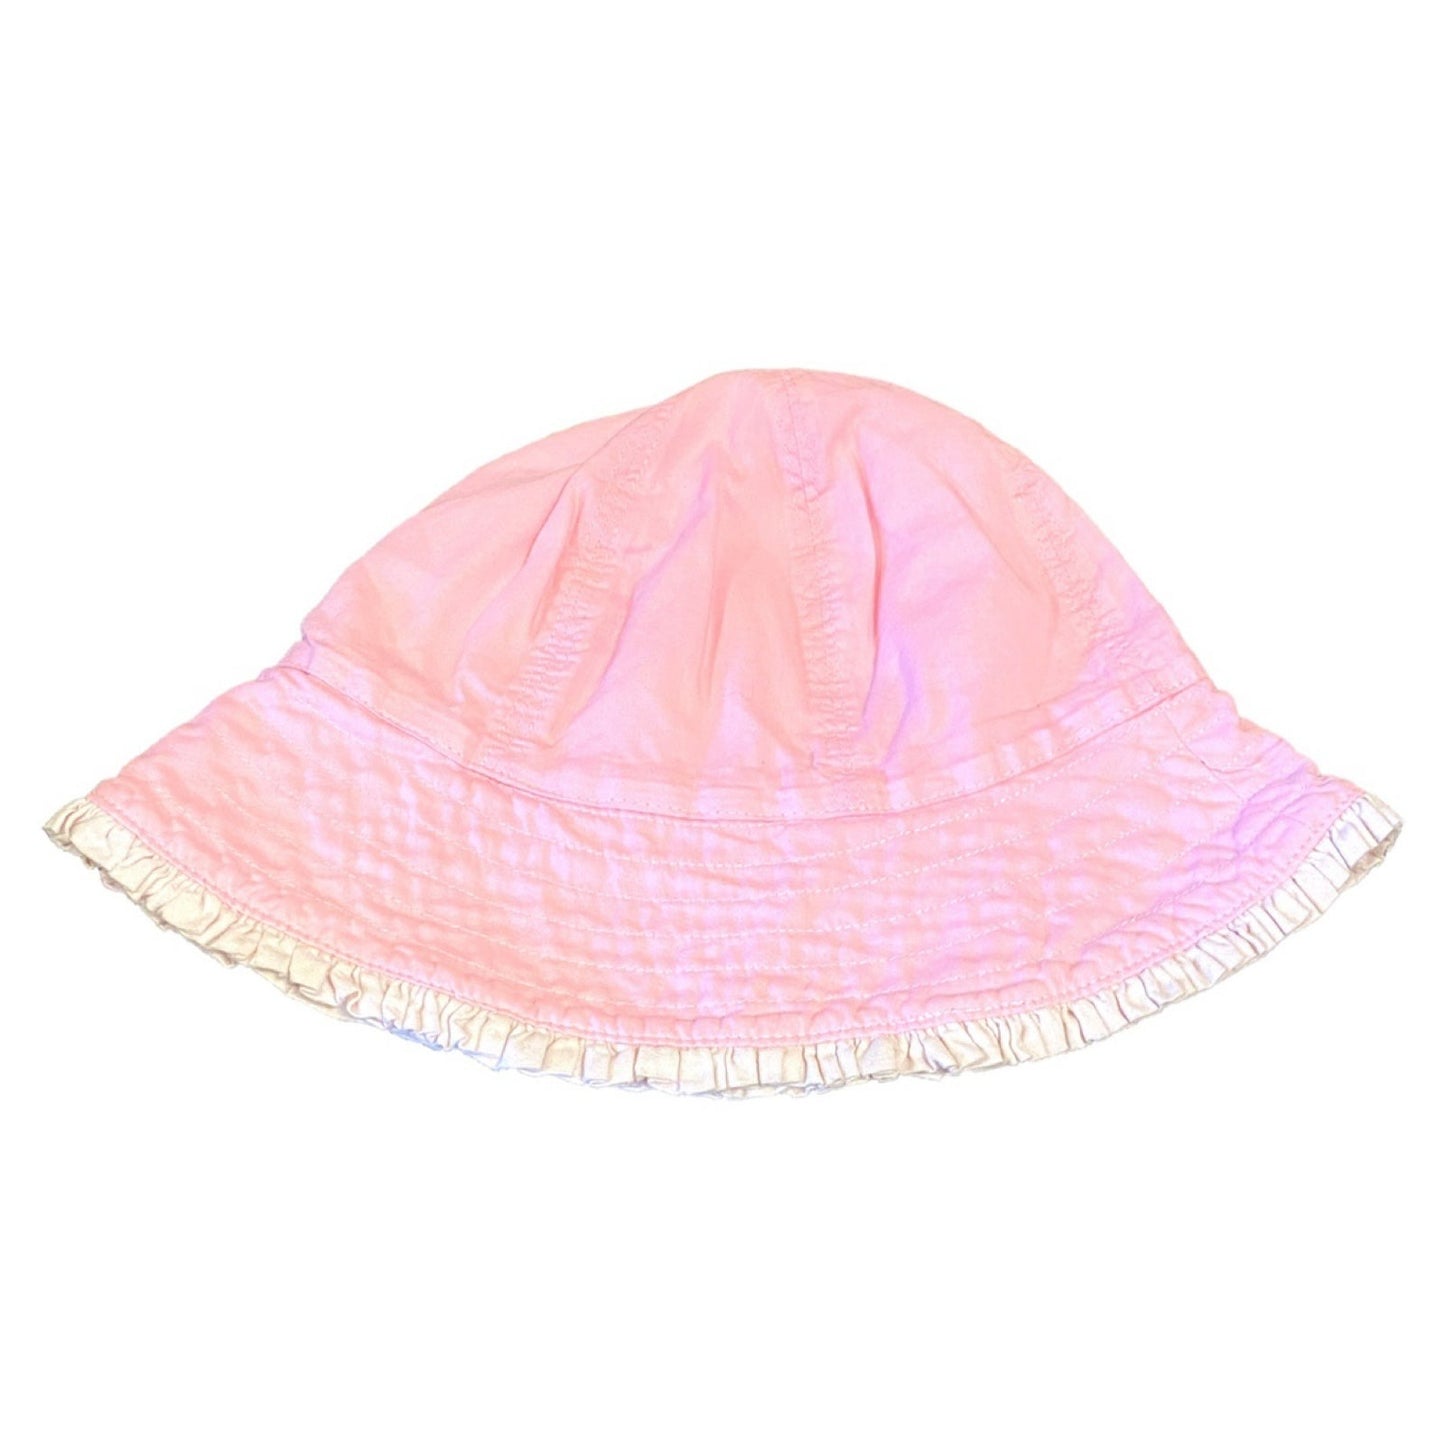 Toddler girls beach hat